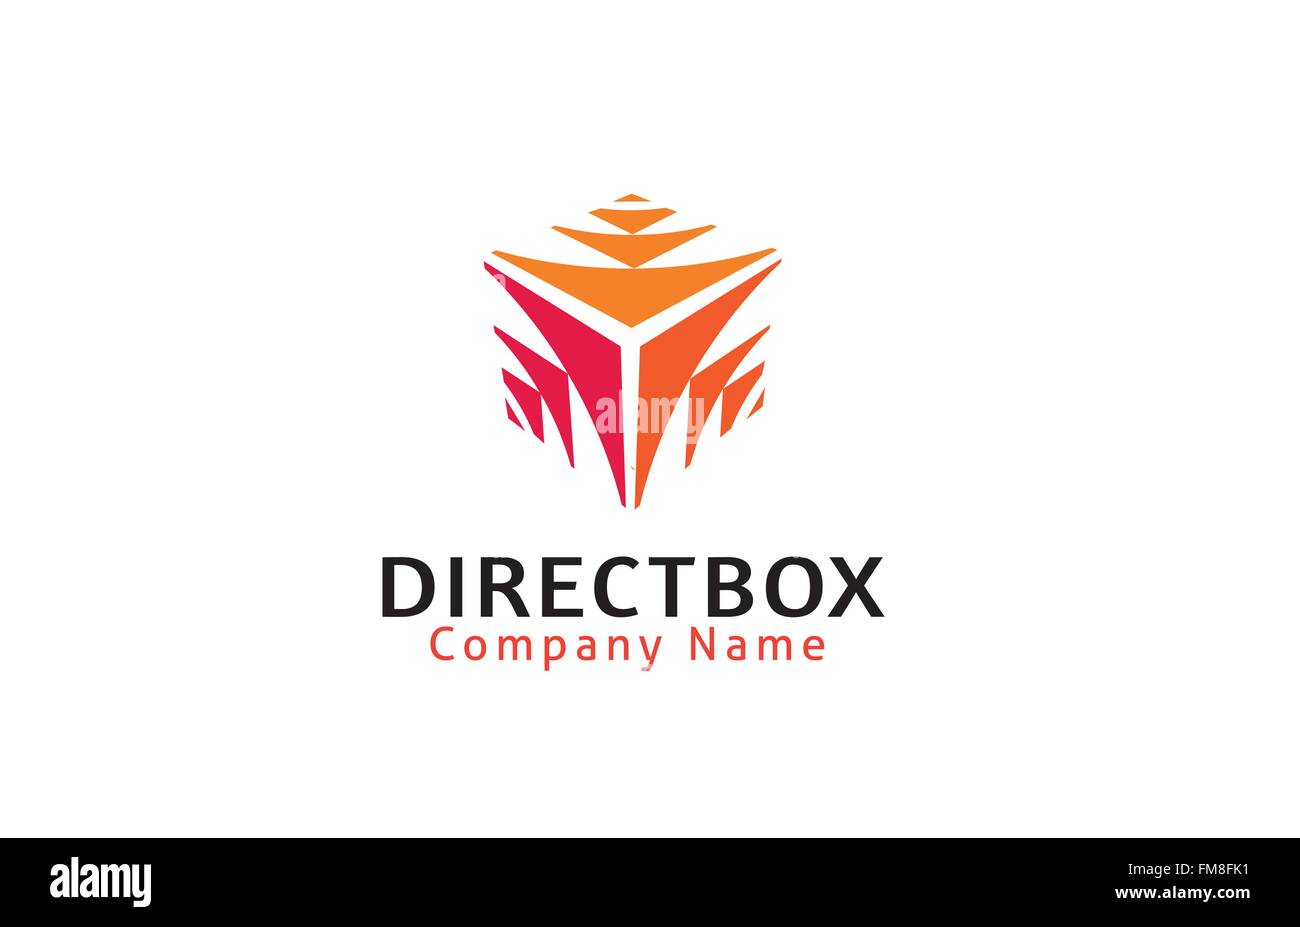 Direct Box Design Illustration Stock Vector